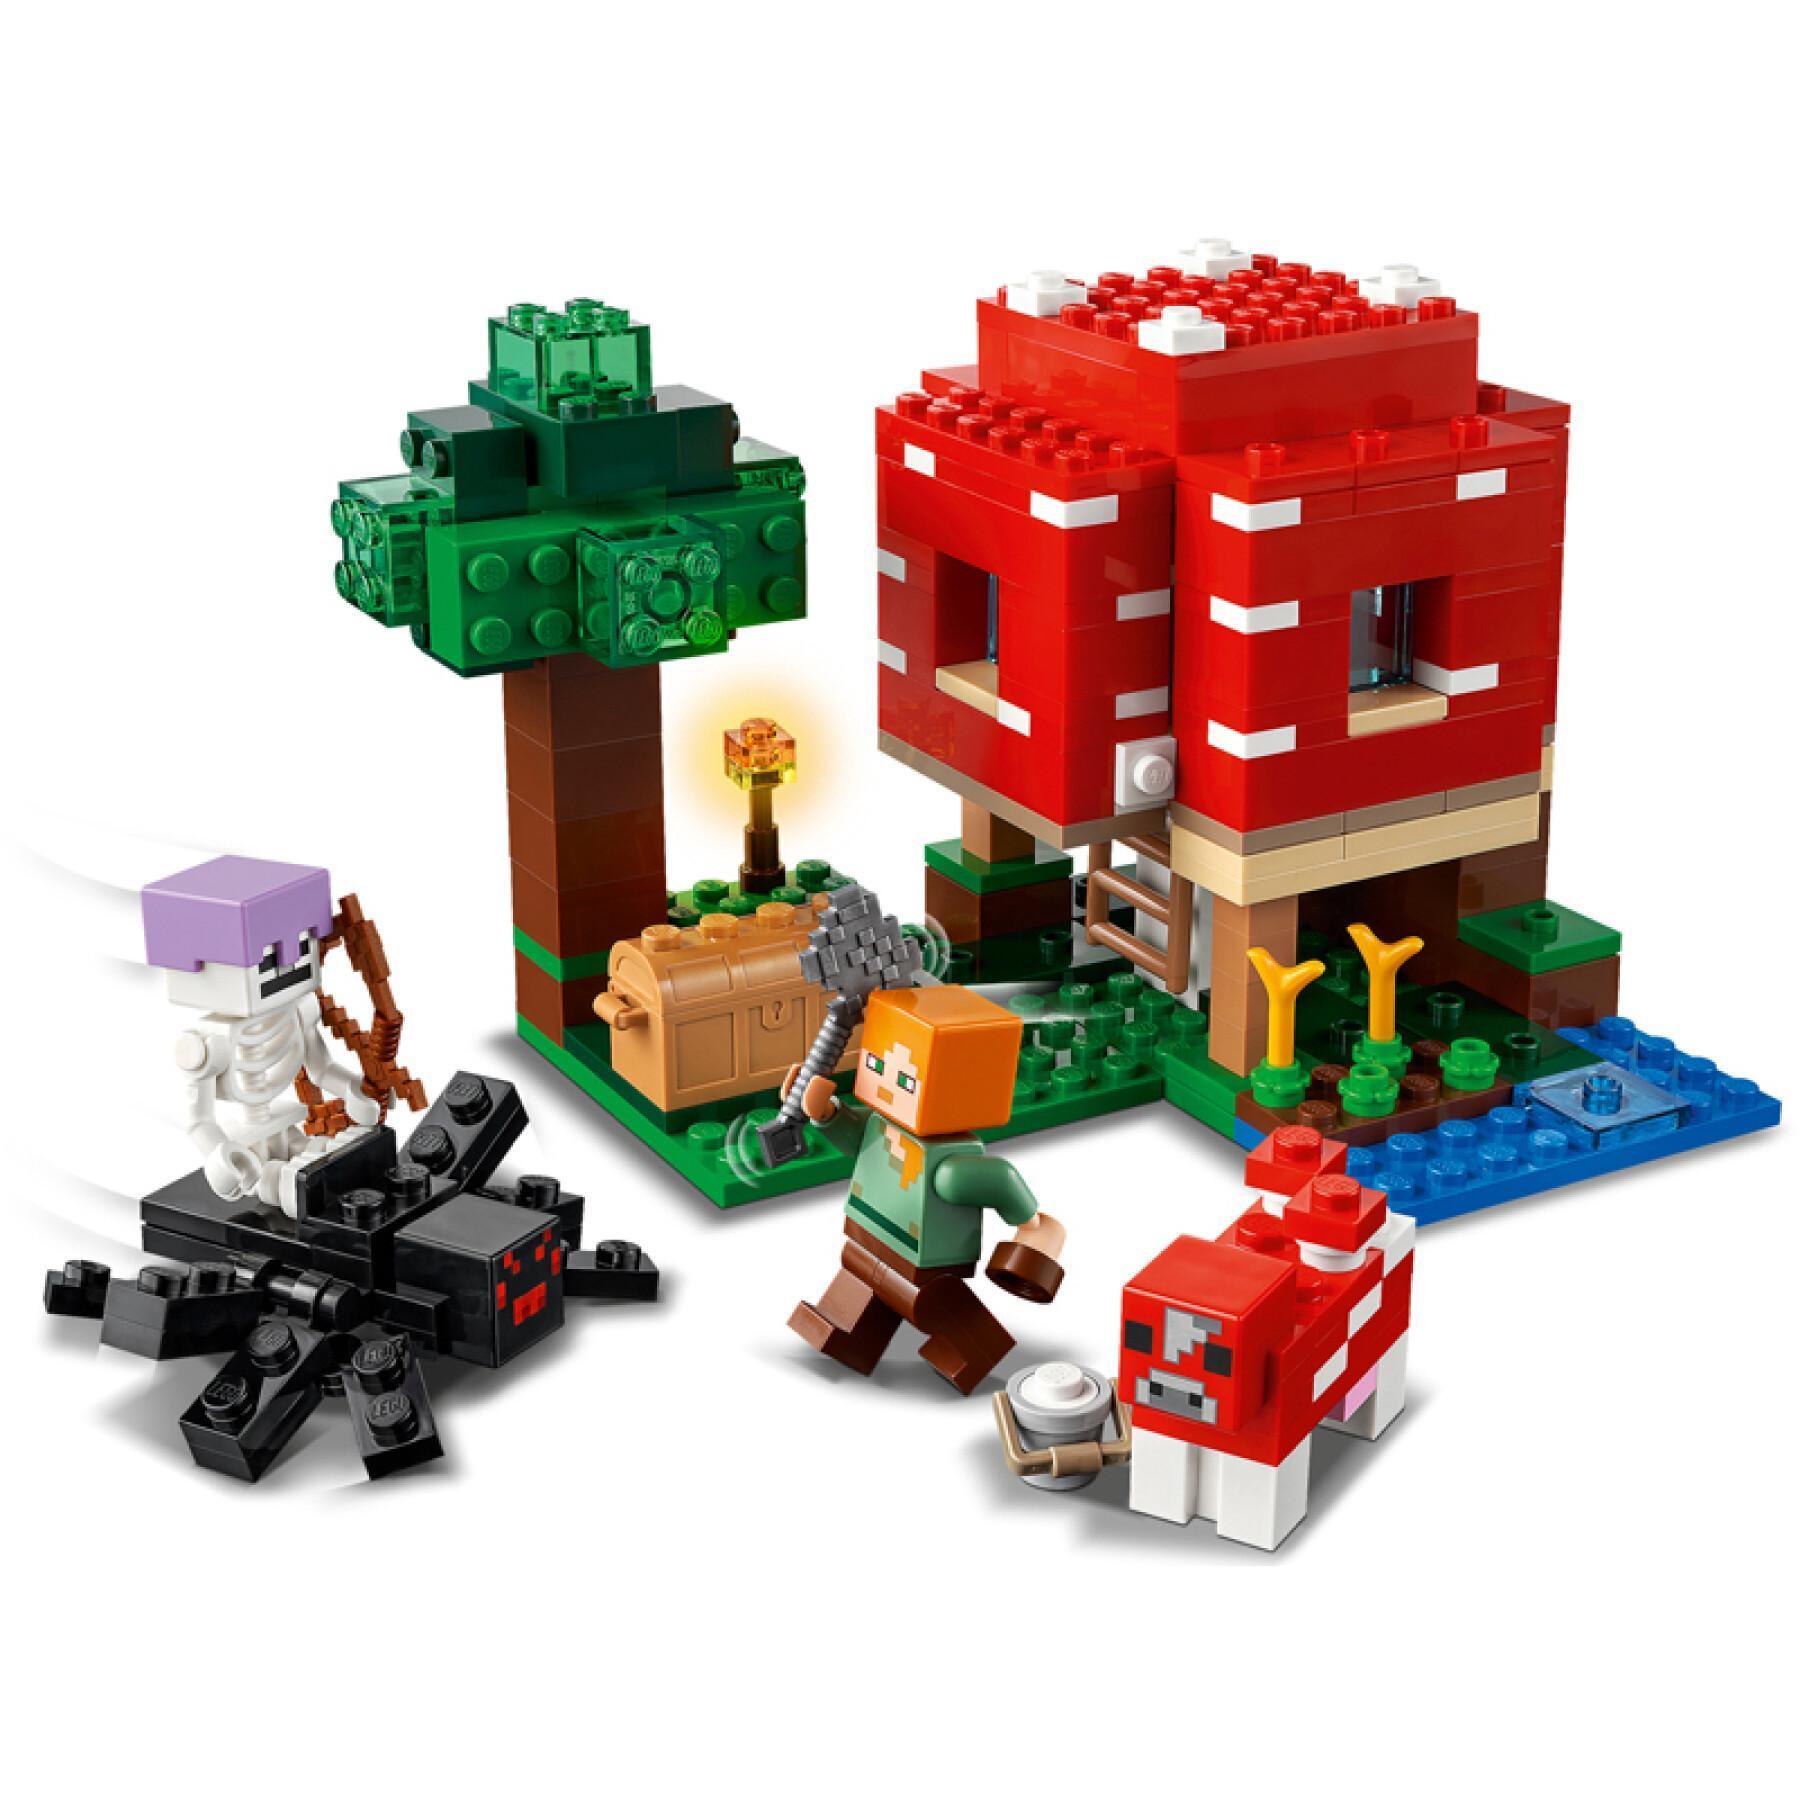 Mushroom house building sets Lego Minecrafte